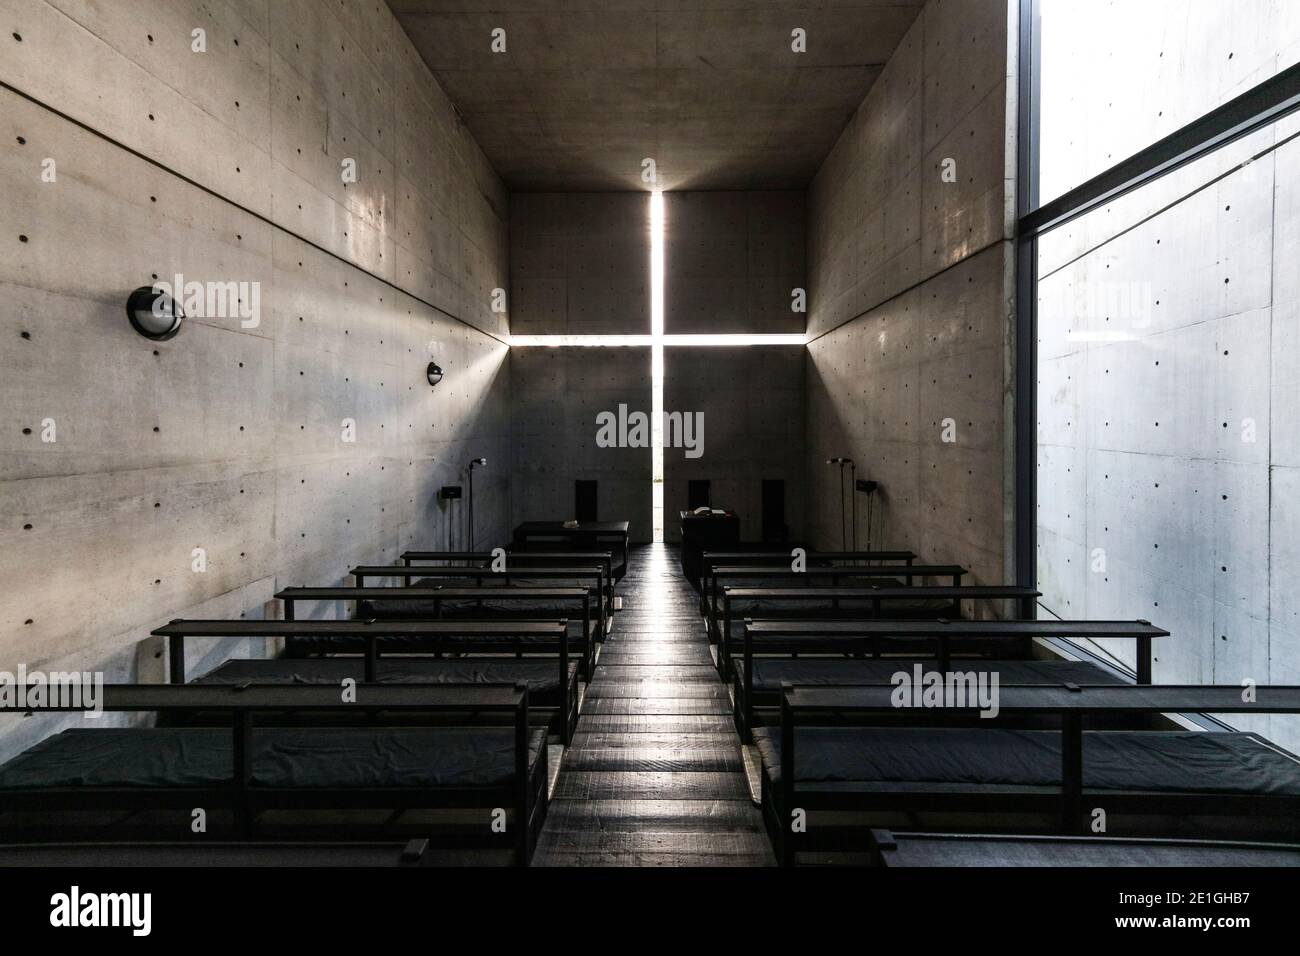 Interior view of the Church of the Light, Osaka, Japan by Tadao Ando. Stock Photo